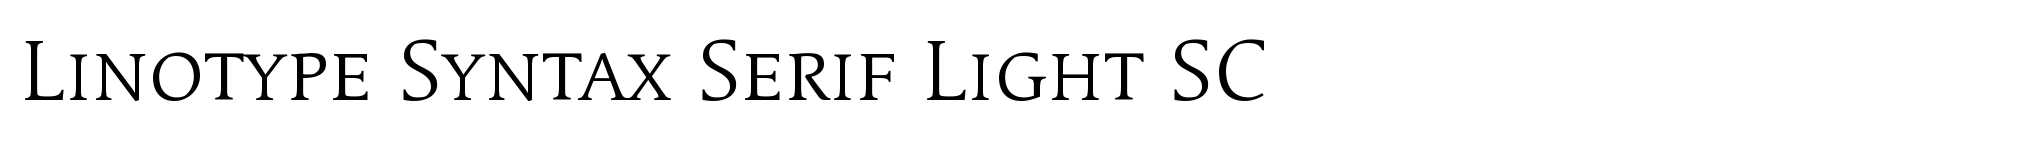 Linotype Syntax Serif Light SC image